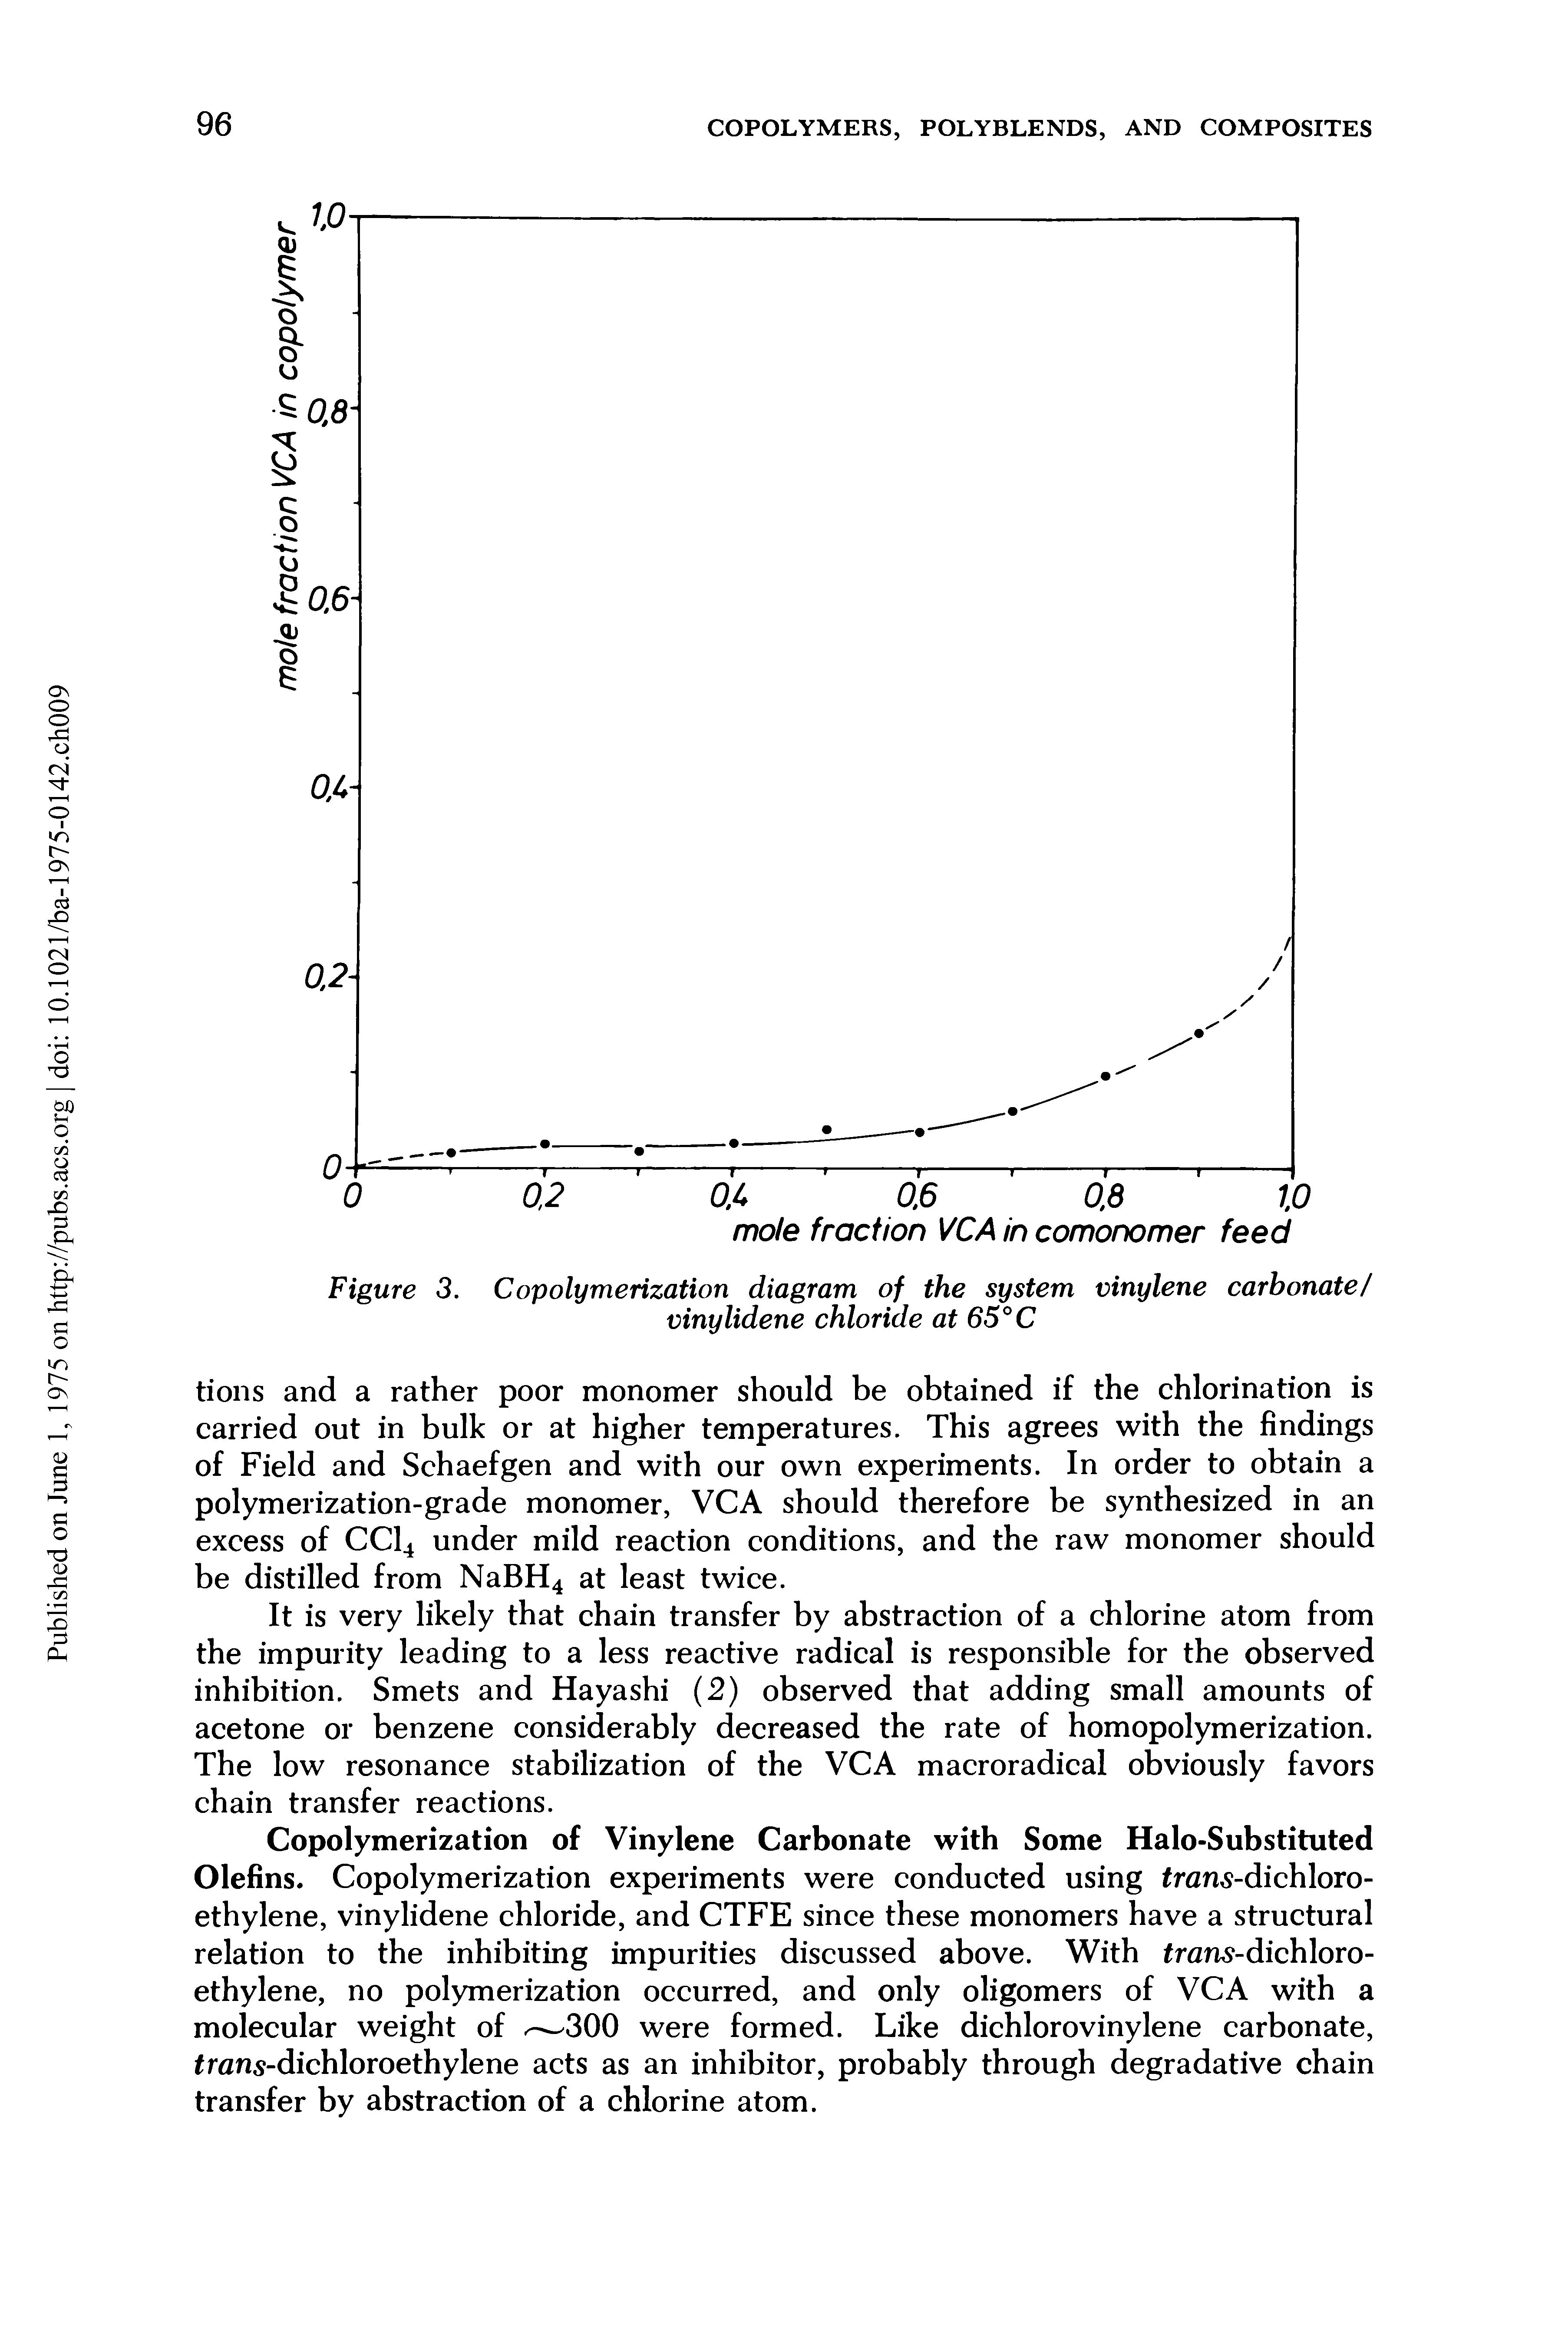 Figure 3. Copolymerization diagram of the system vinylene carbonate/ vinylidene chloride at 65°C...